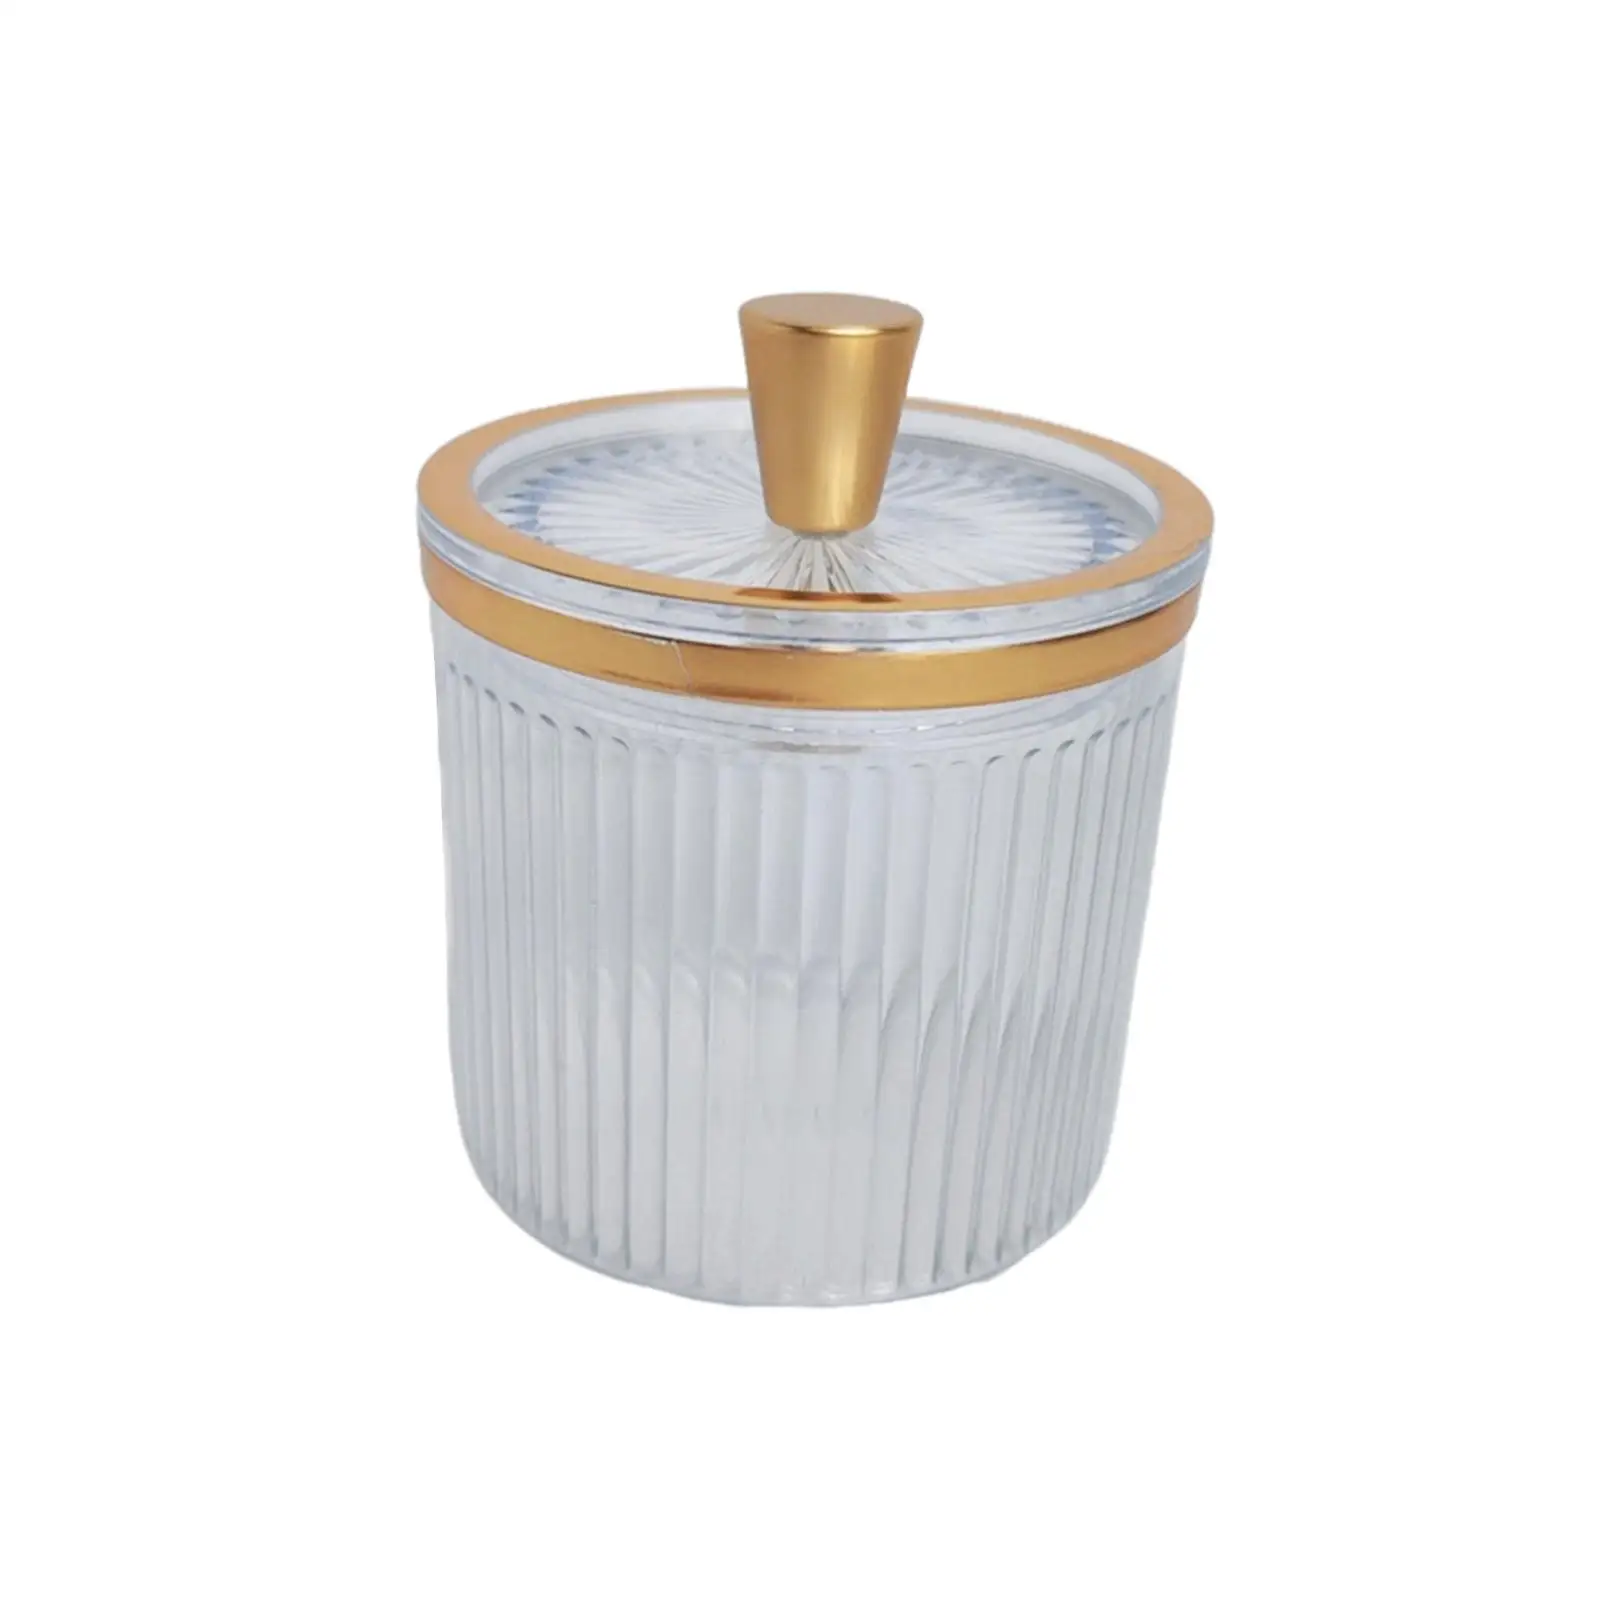 Multifunctional Makeup Cotton Swab Ball Holder Jar with Lid for Dresser Home